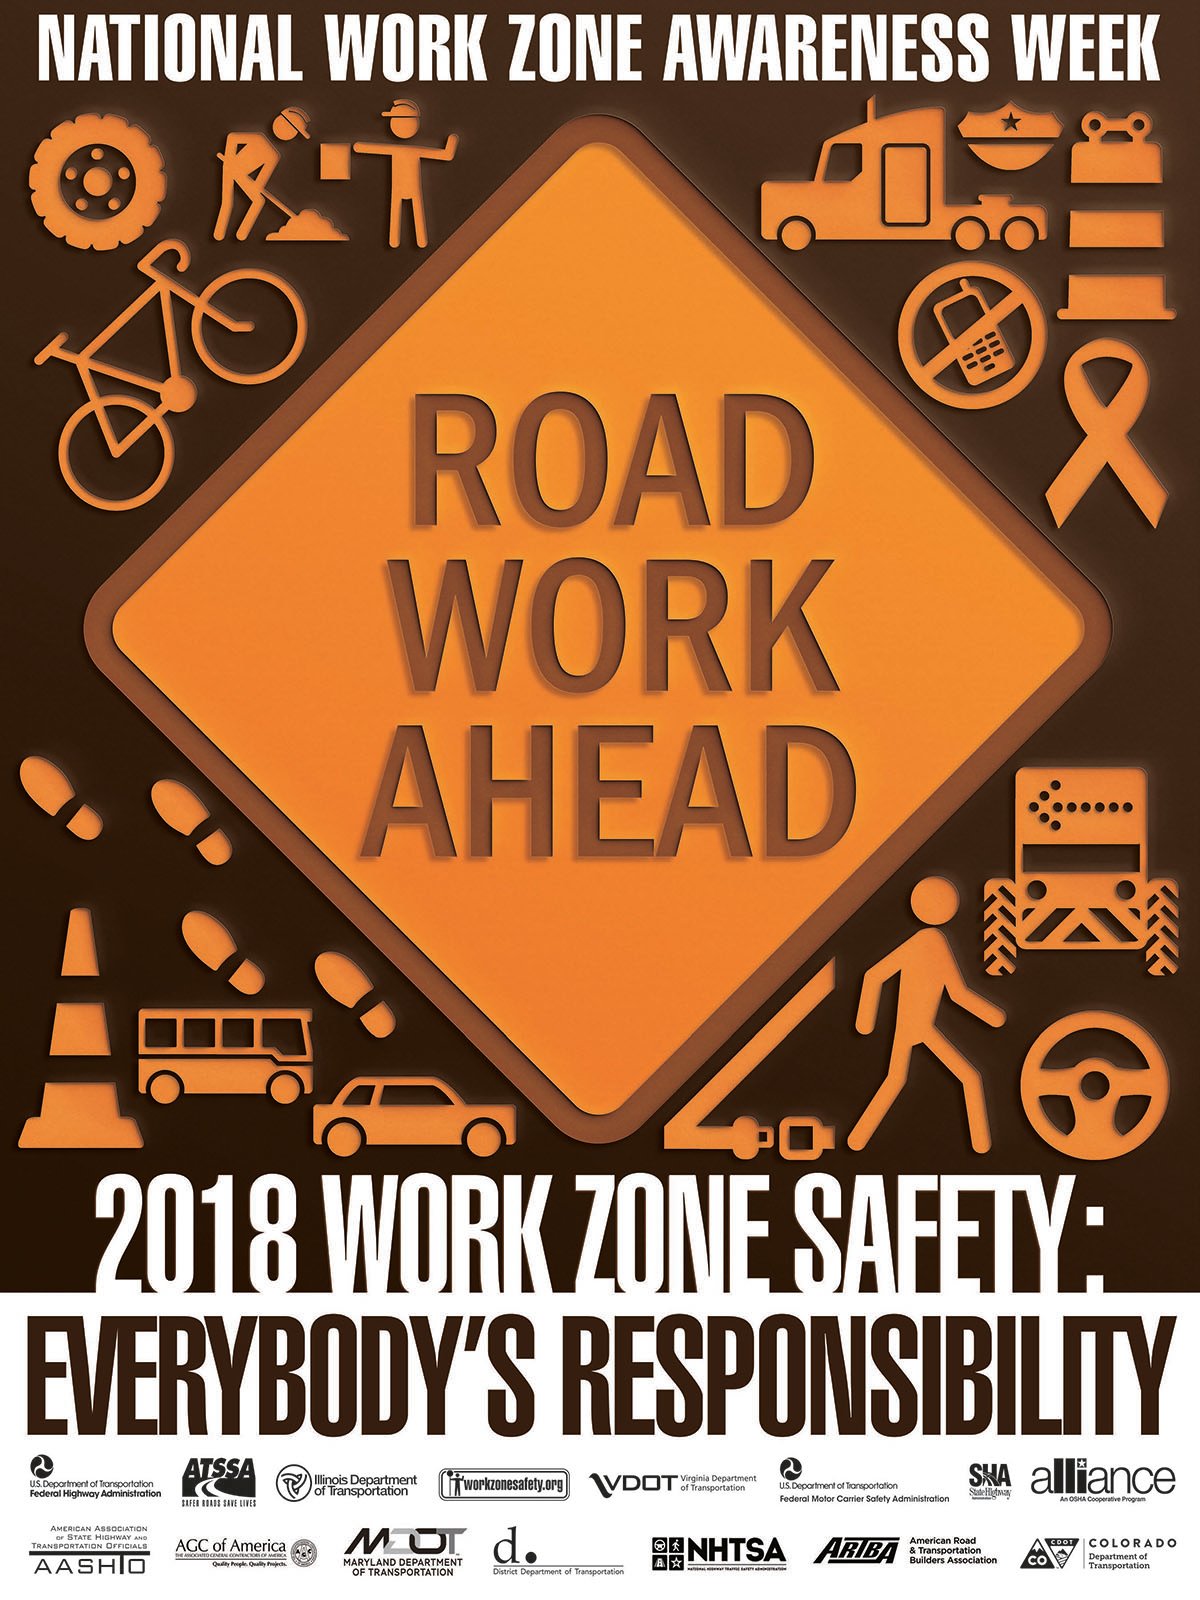 National Work Zone Awareness Poster_w CDOT logo_2018.jpg